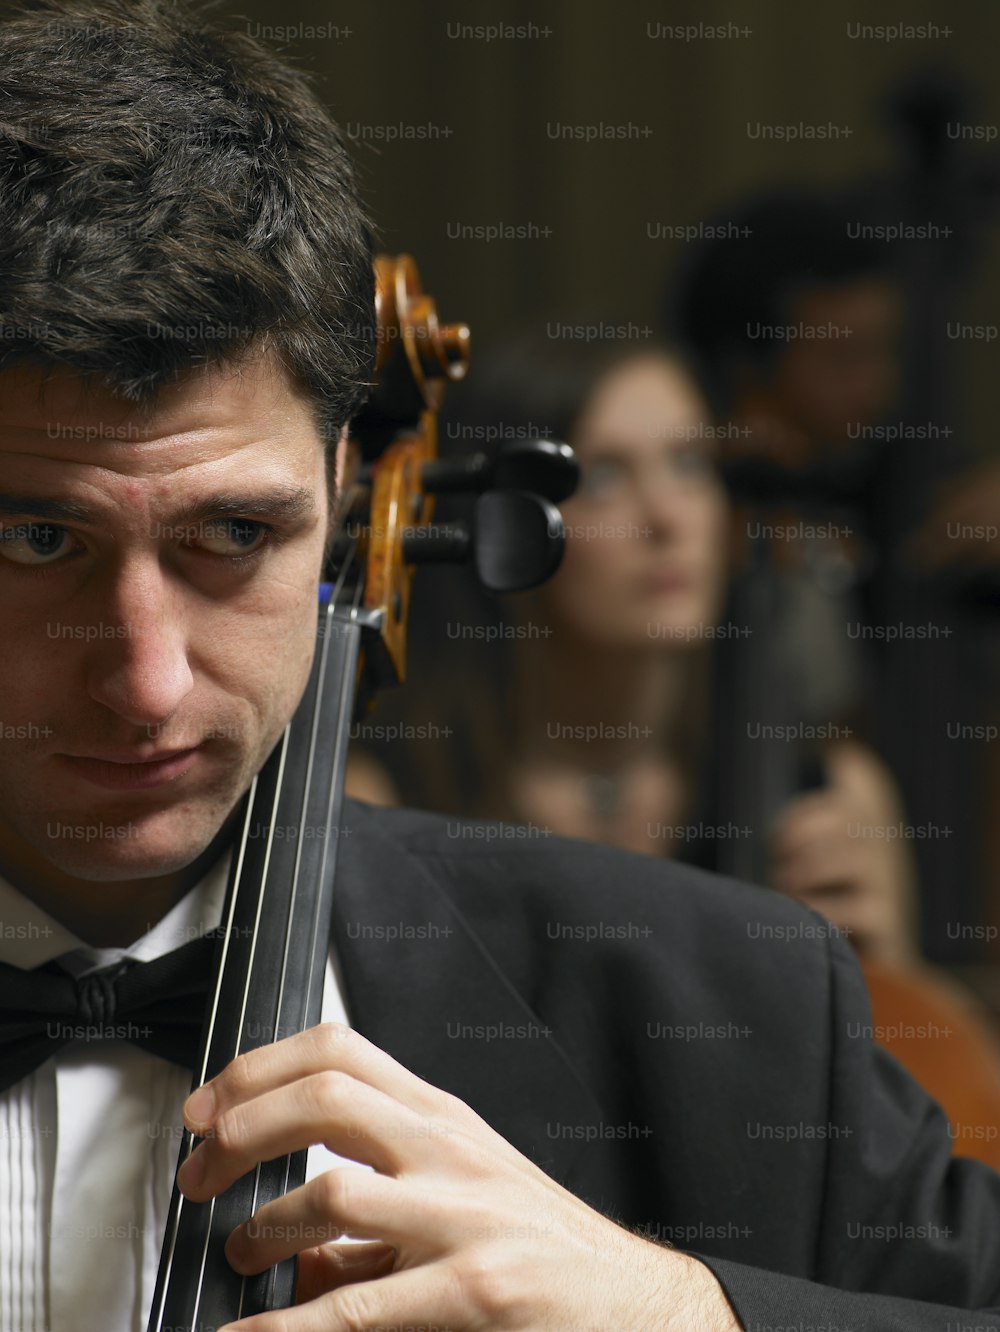 a man in a tuxedo holding a violin